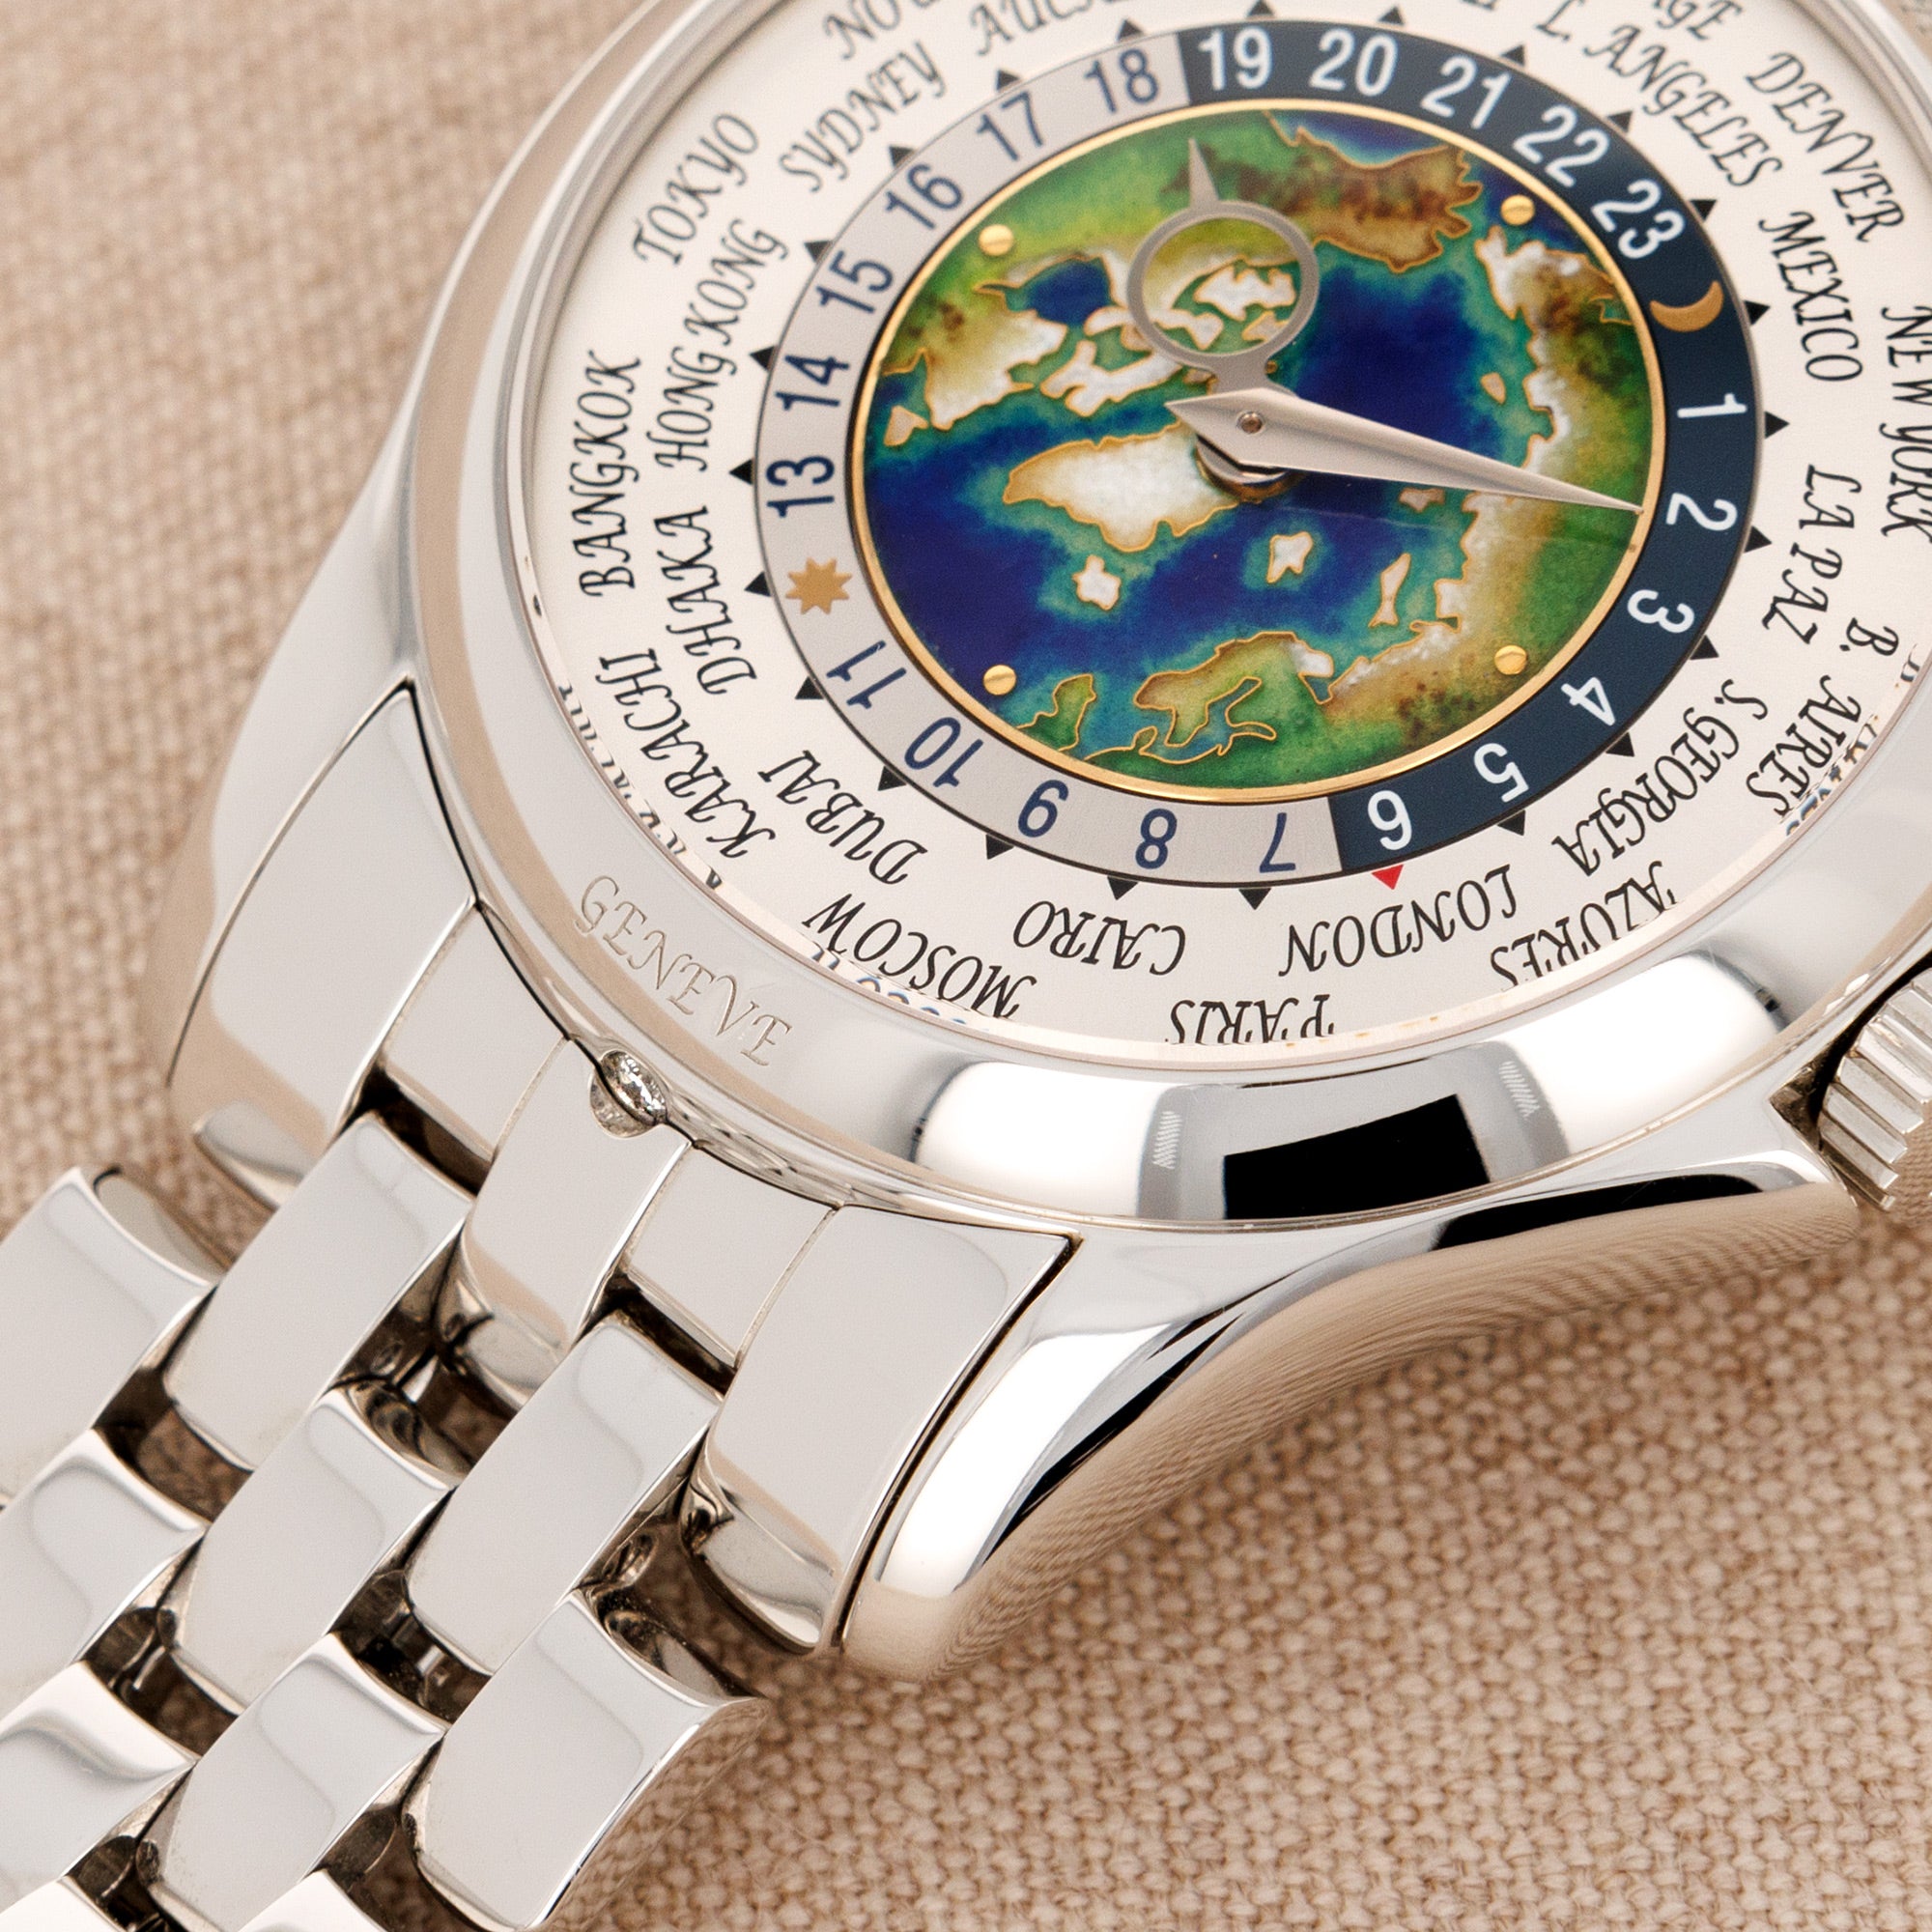 Patek Philippe Platinum World Time Watch Ref. 5131